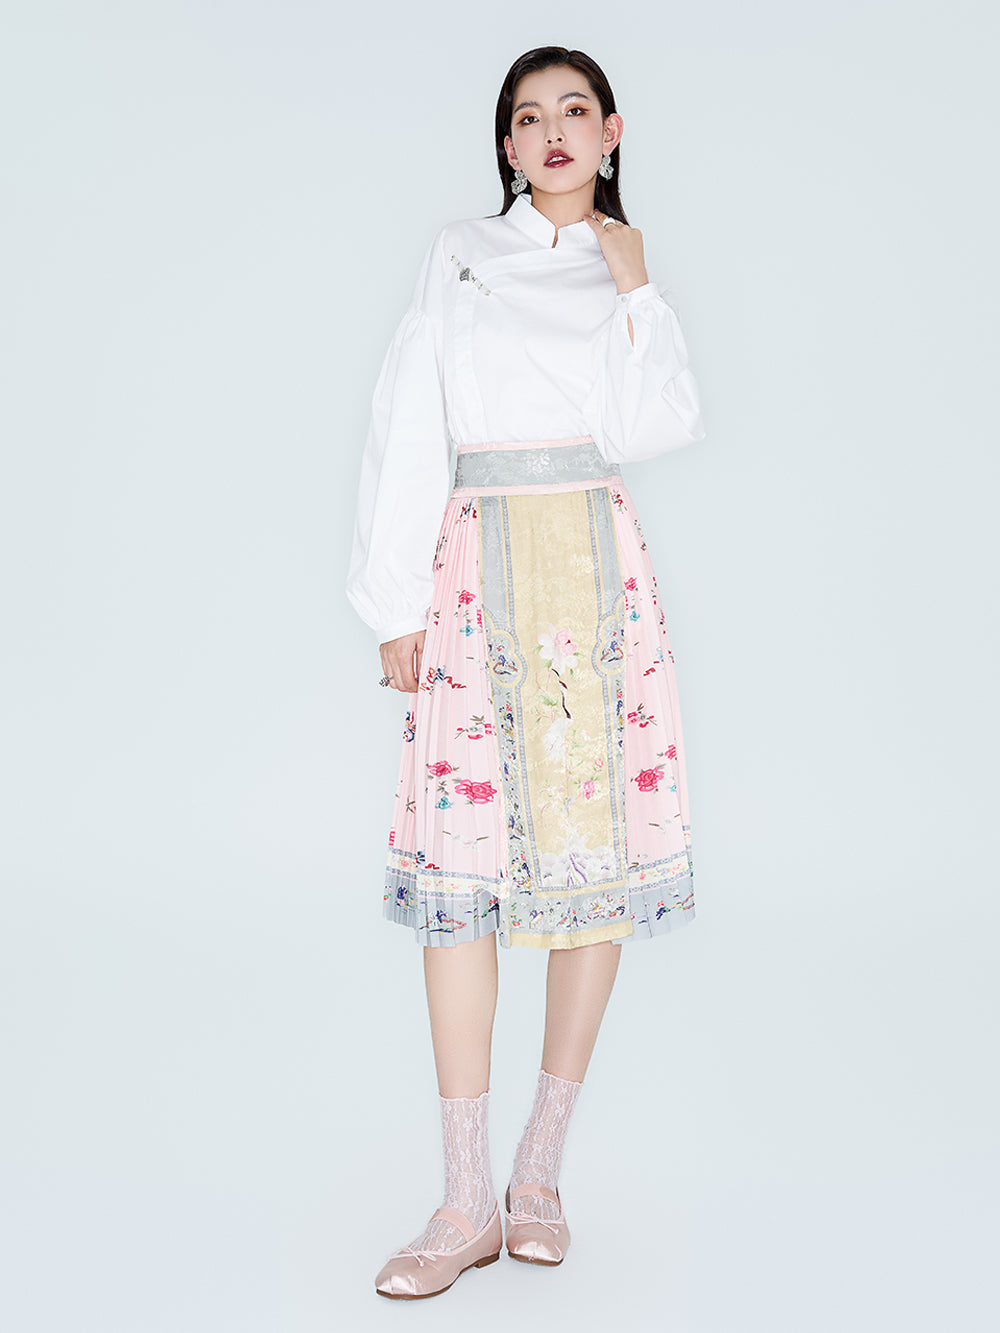 MUKZIN Linglong "Butterfly Love Flower" New Chinese-Inspired Printed Chiffon Cheongsam Skirt